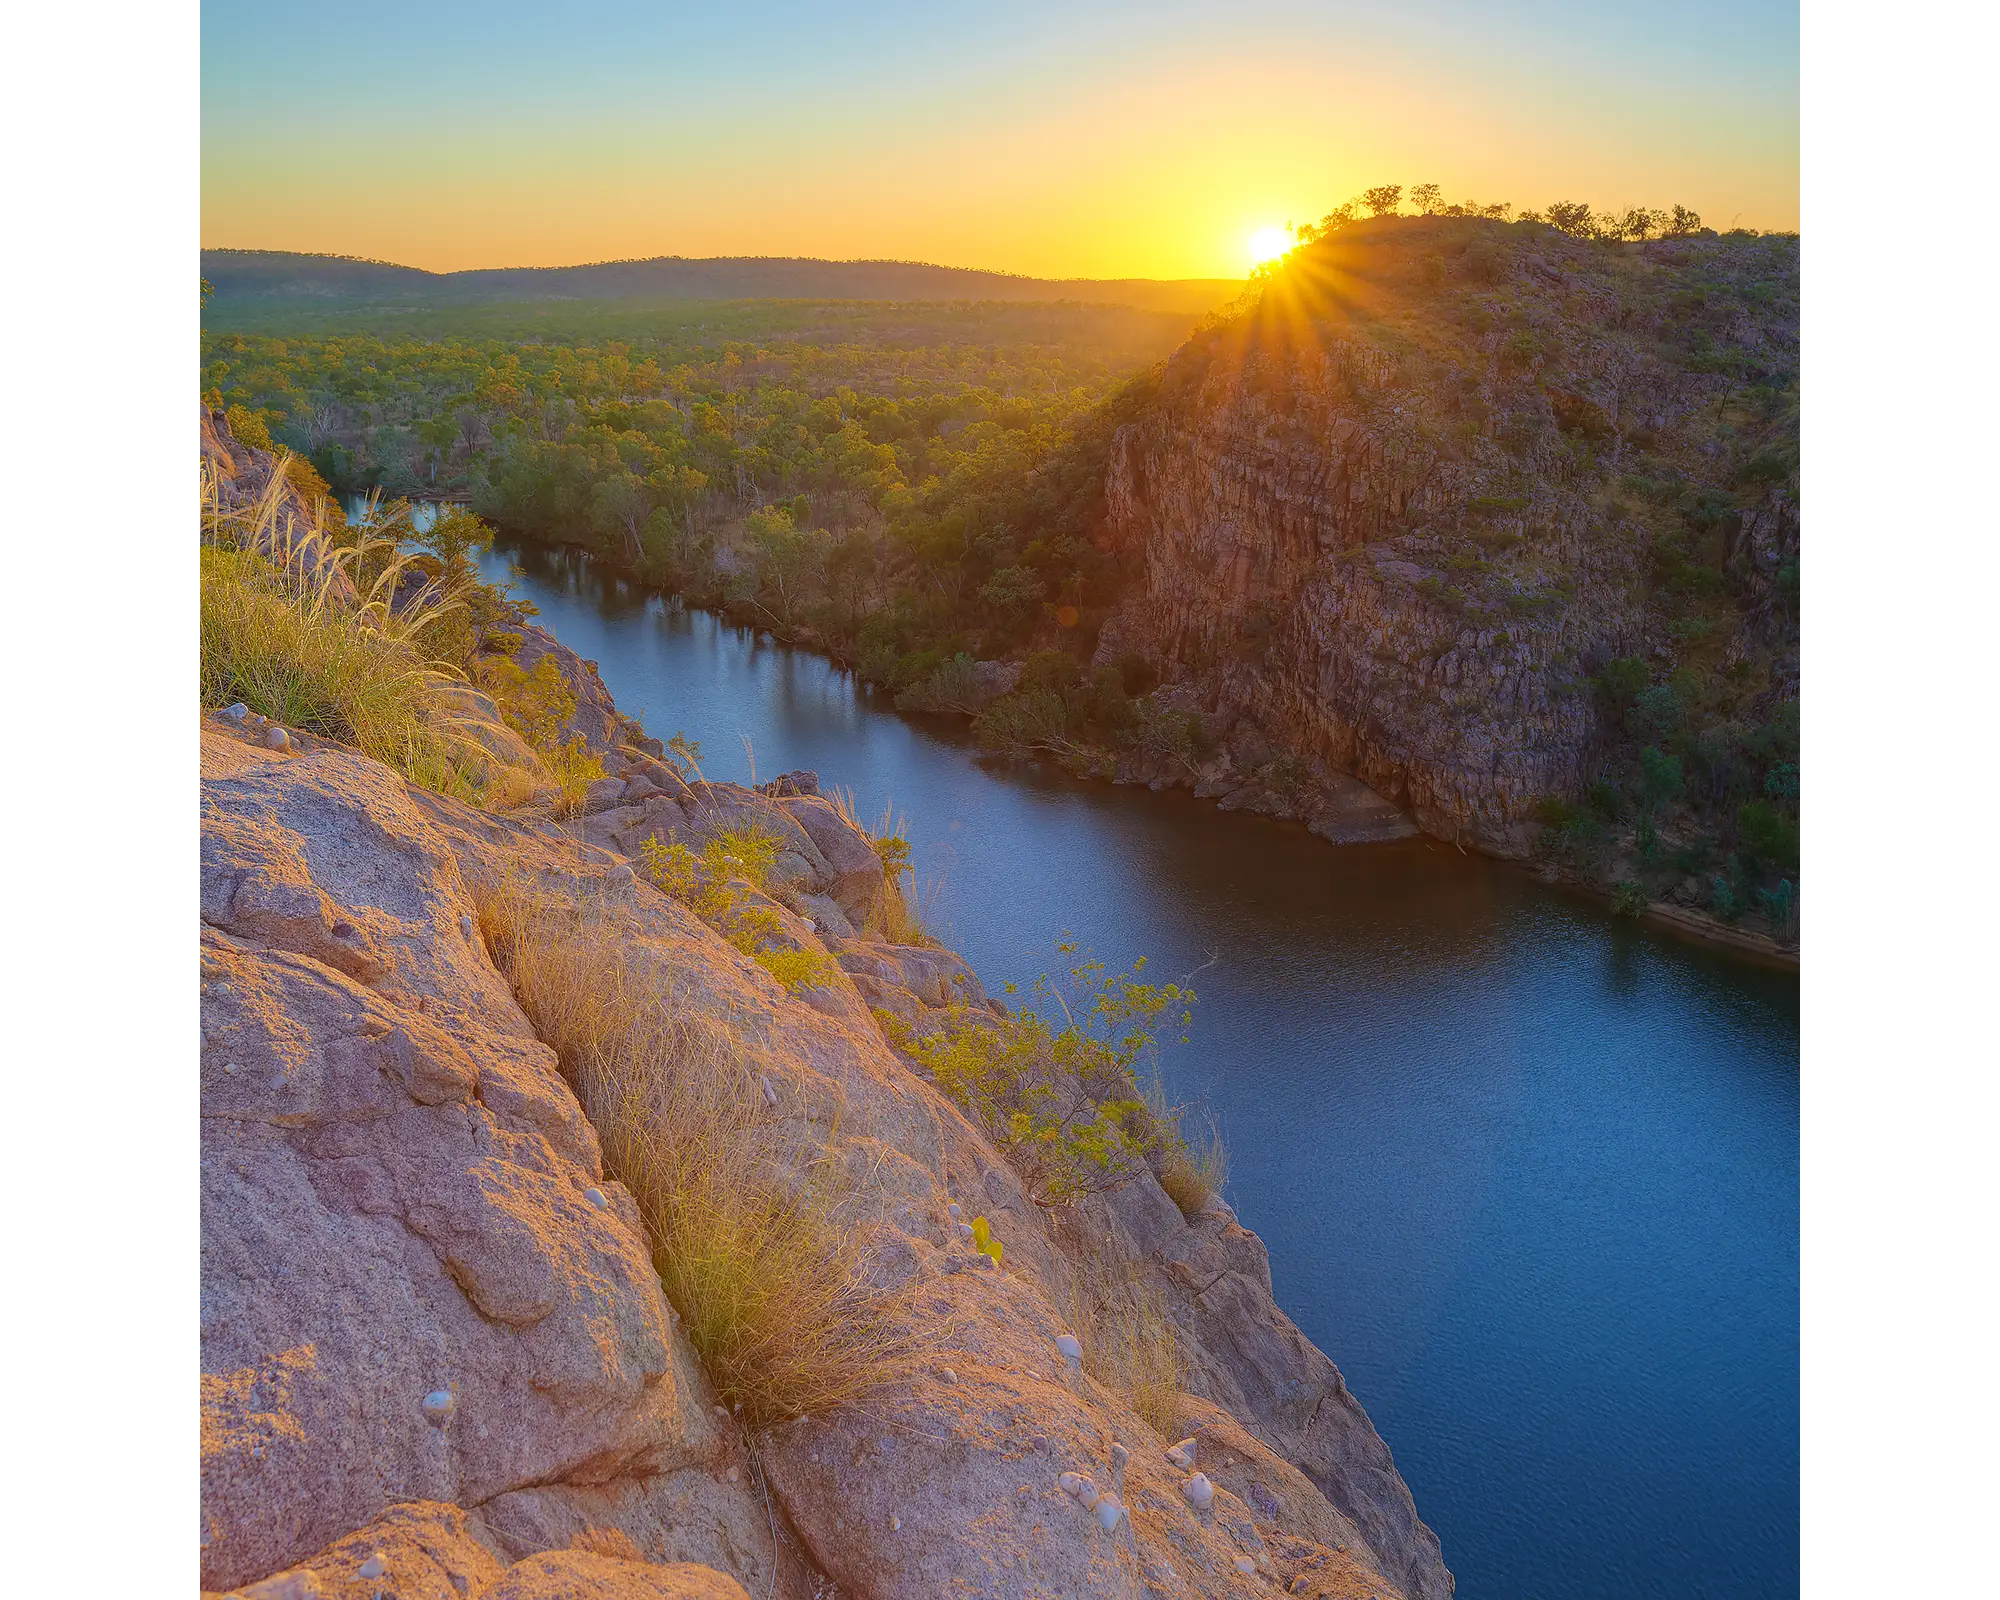 Last Light. Setting sun over Katherine Gorge, Nitmiluk National Park, Northern Territory, Australia.